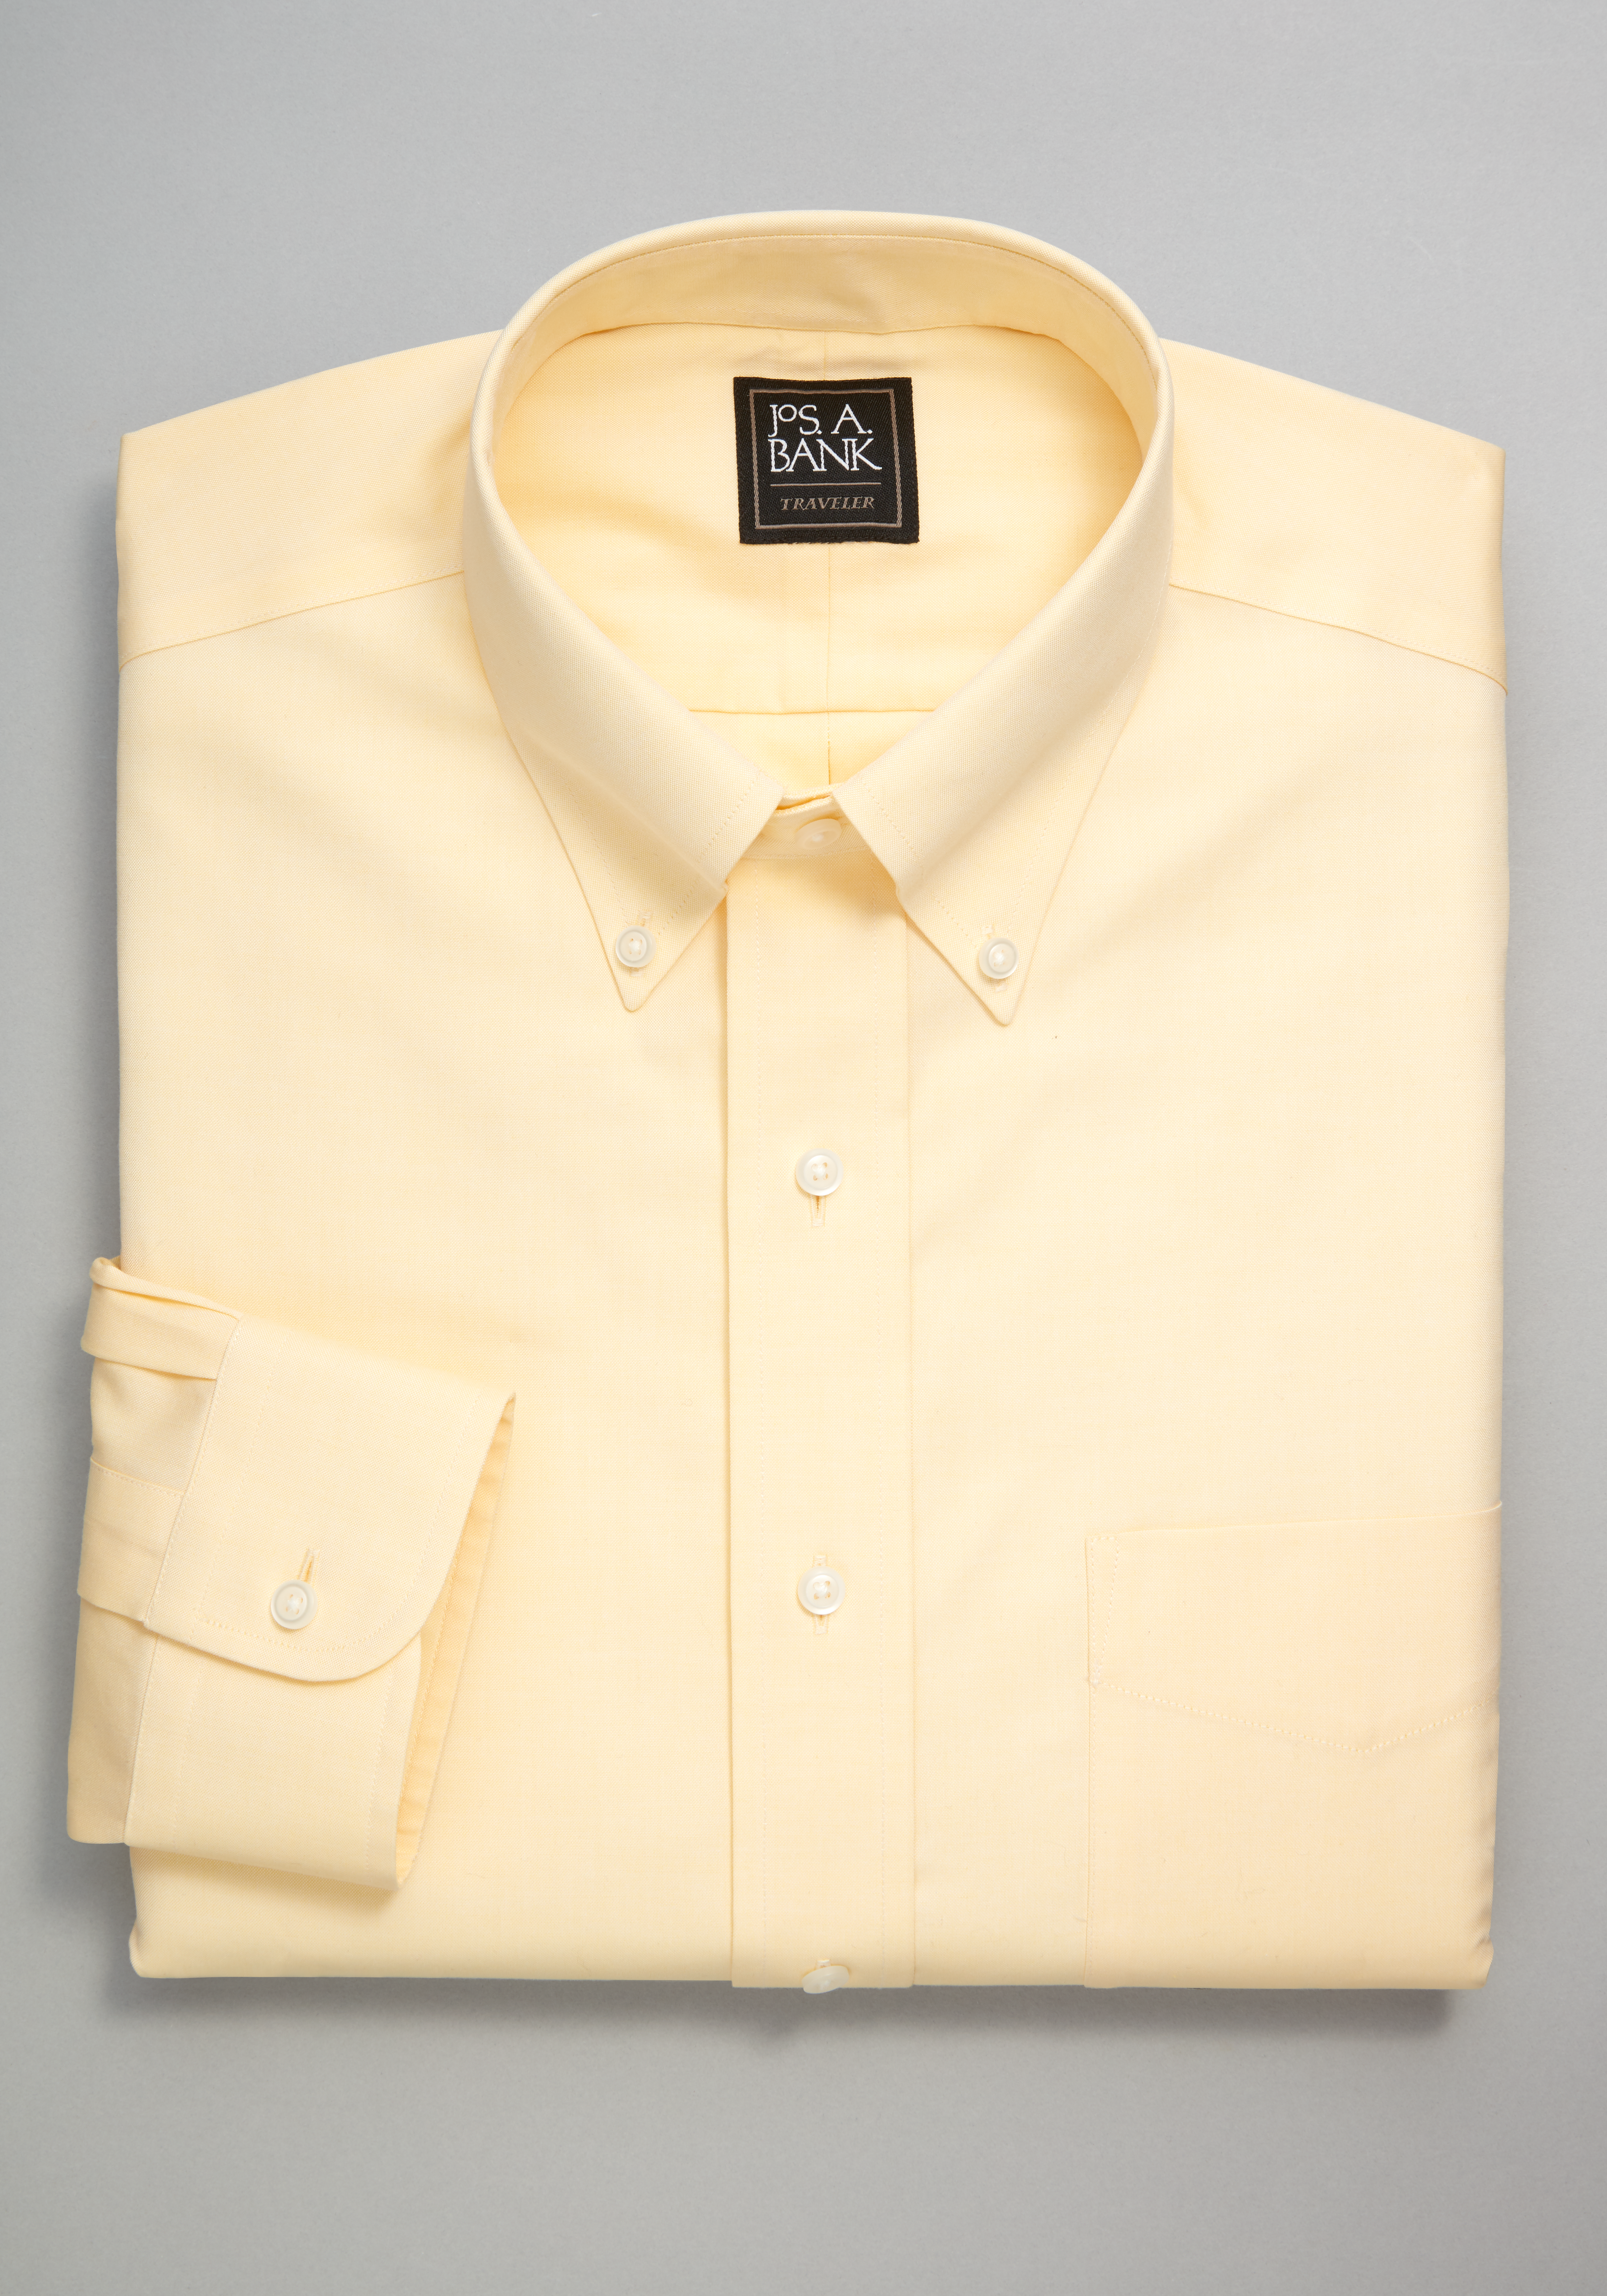 Men's Sale, Traveler Collection Tailored Fit Button-Down Dress Shirt - Jos A Bank